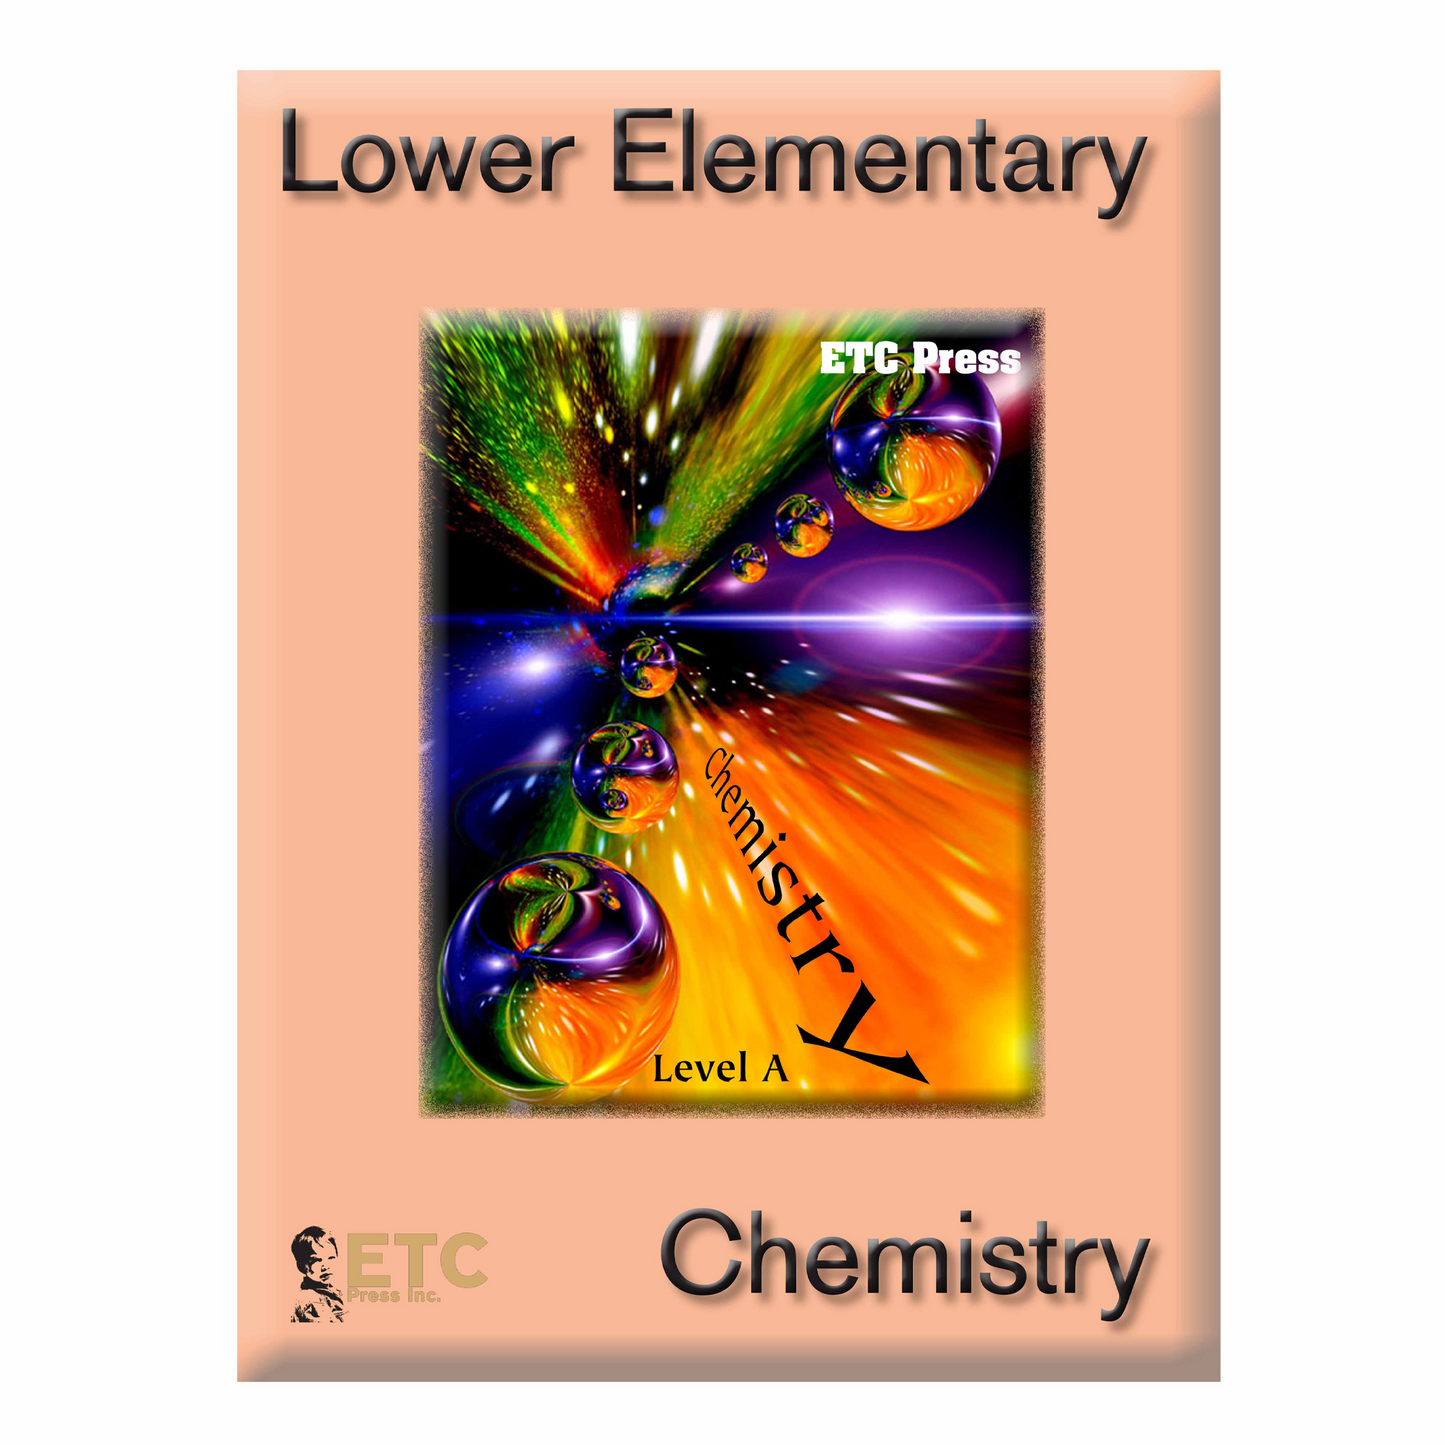 Lower Elementary Chemistry Curriculum - Nienhuis AMI